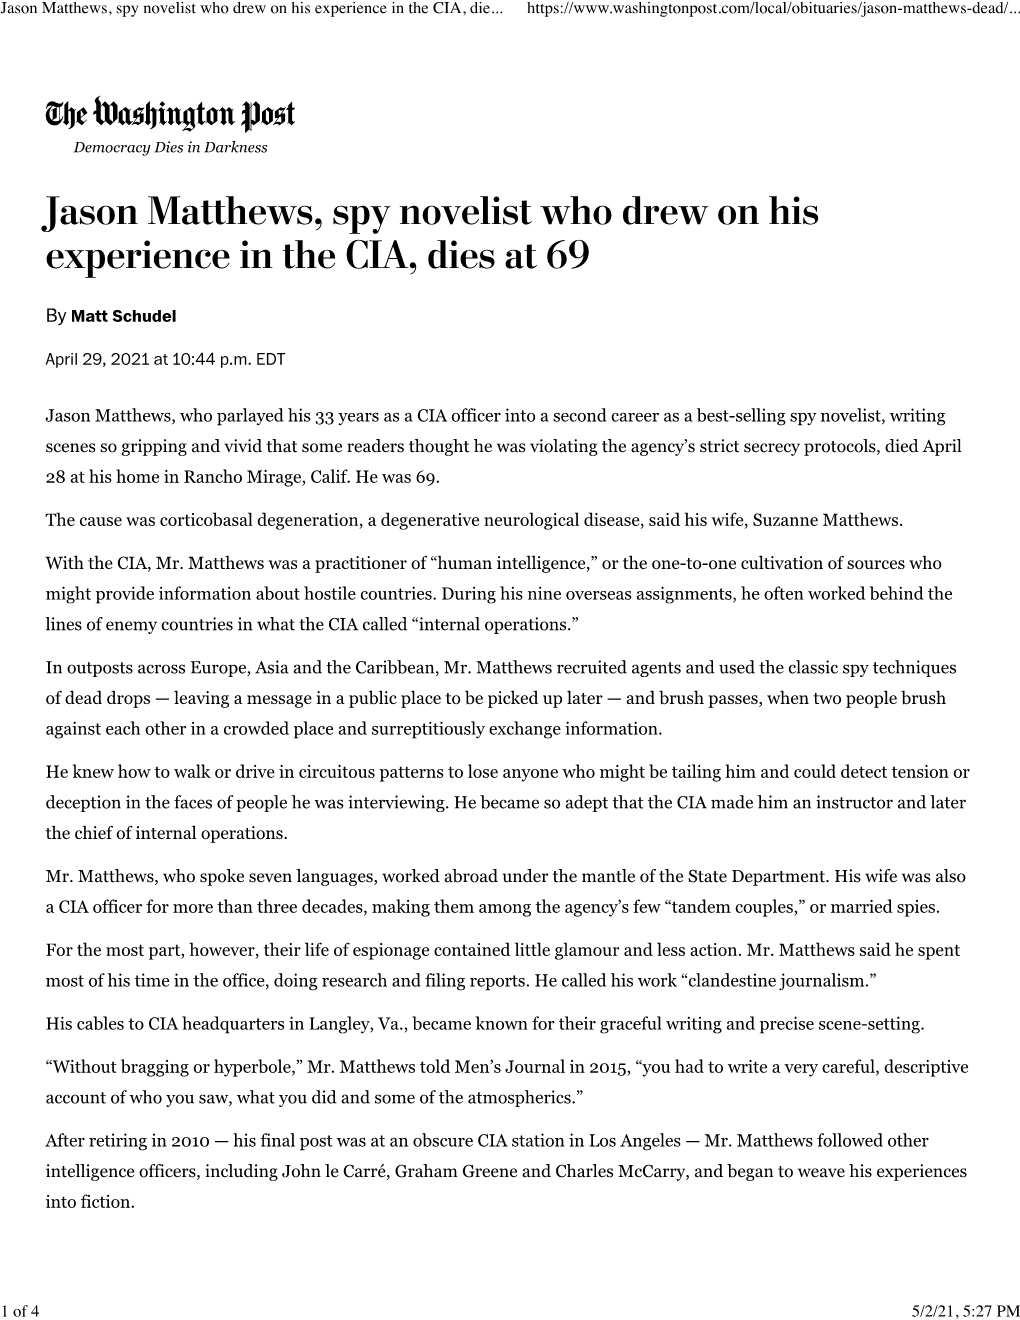 Jason Matthews, Spy Novelist Who Drew on His Experience in the CIA, Die